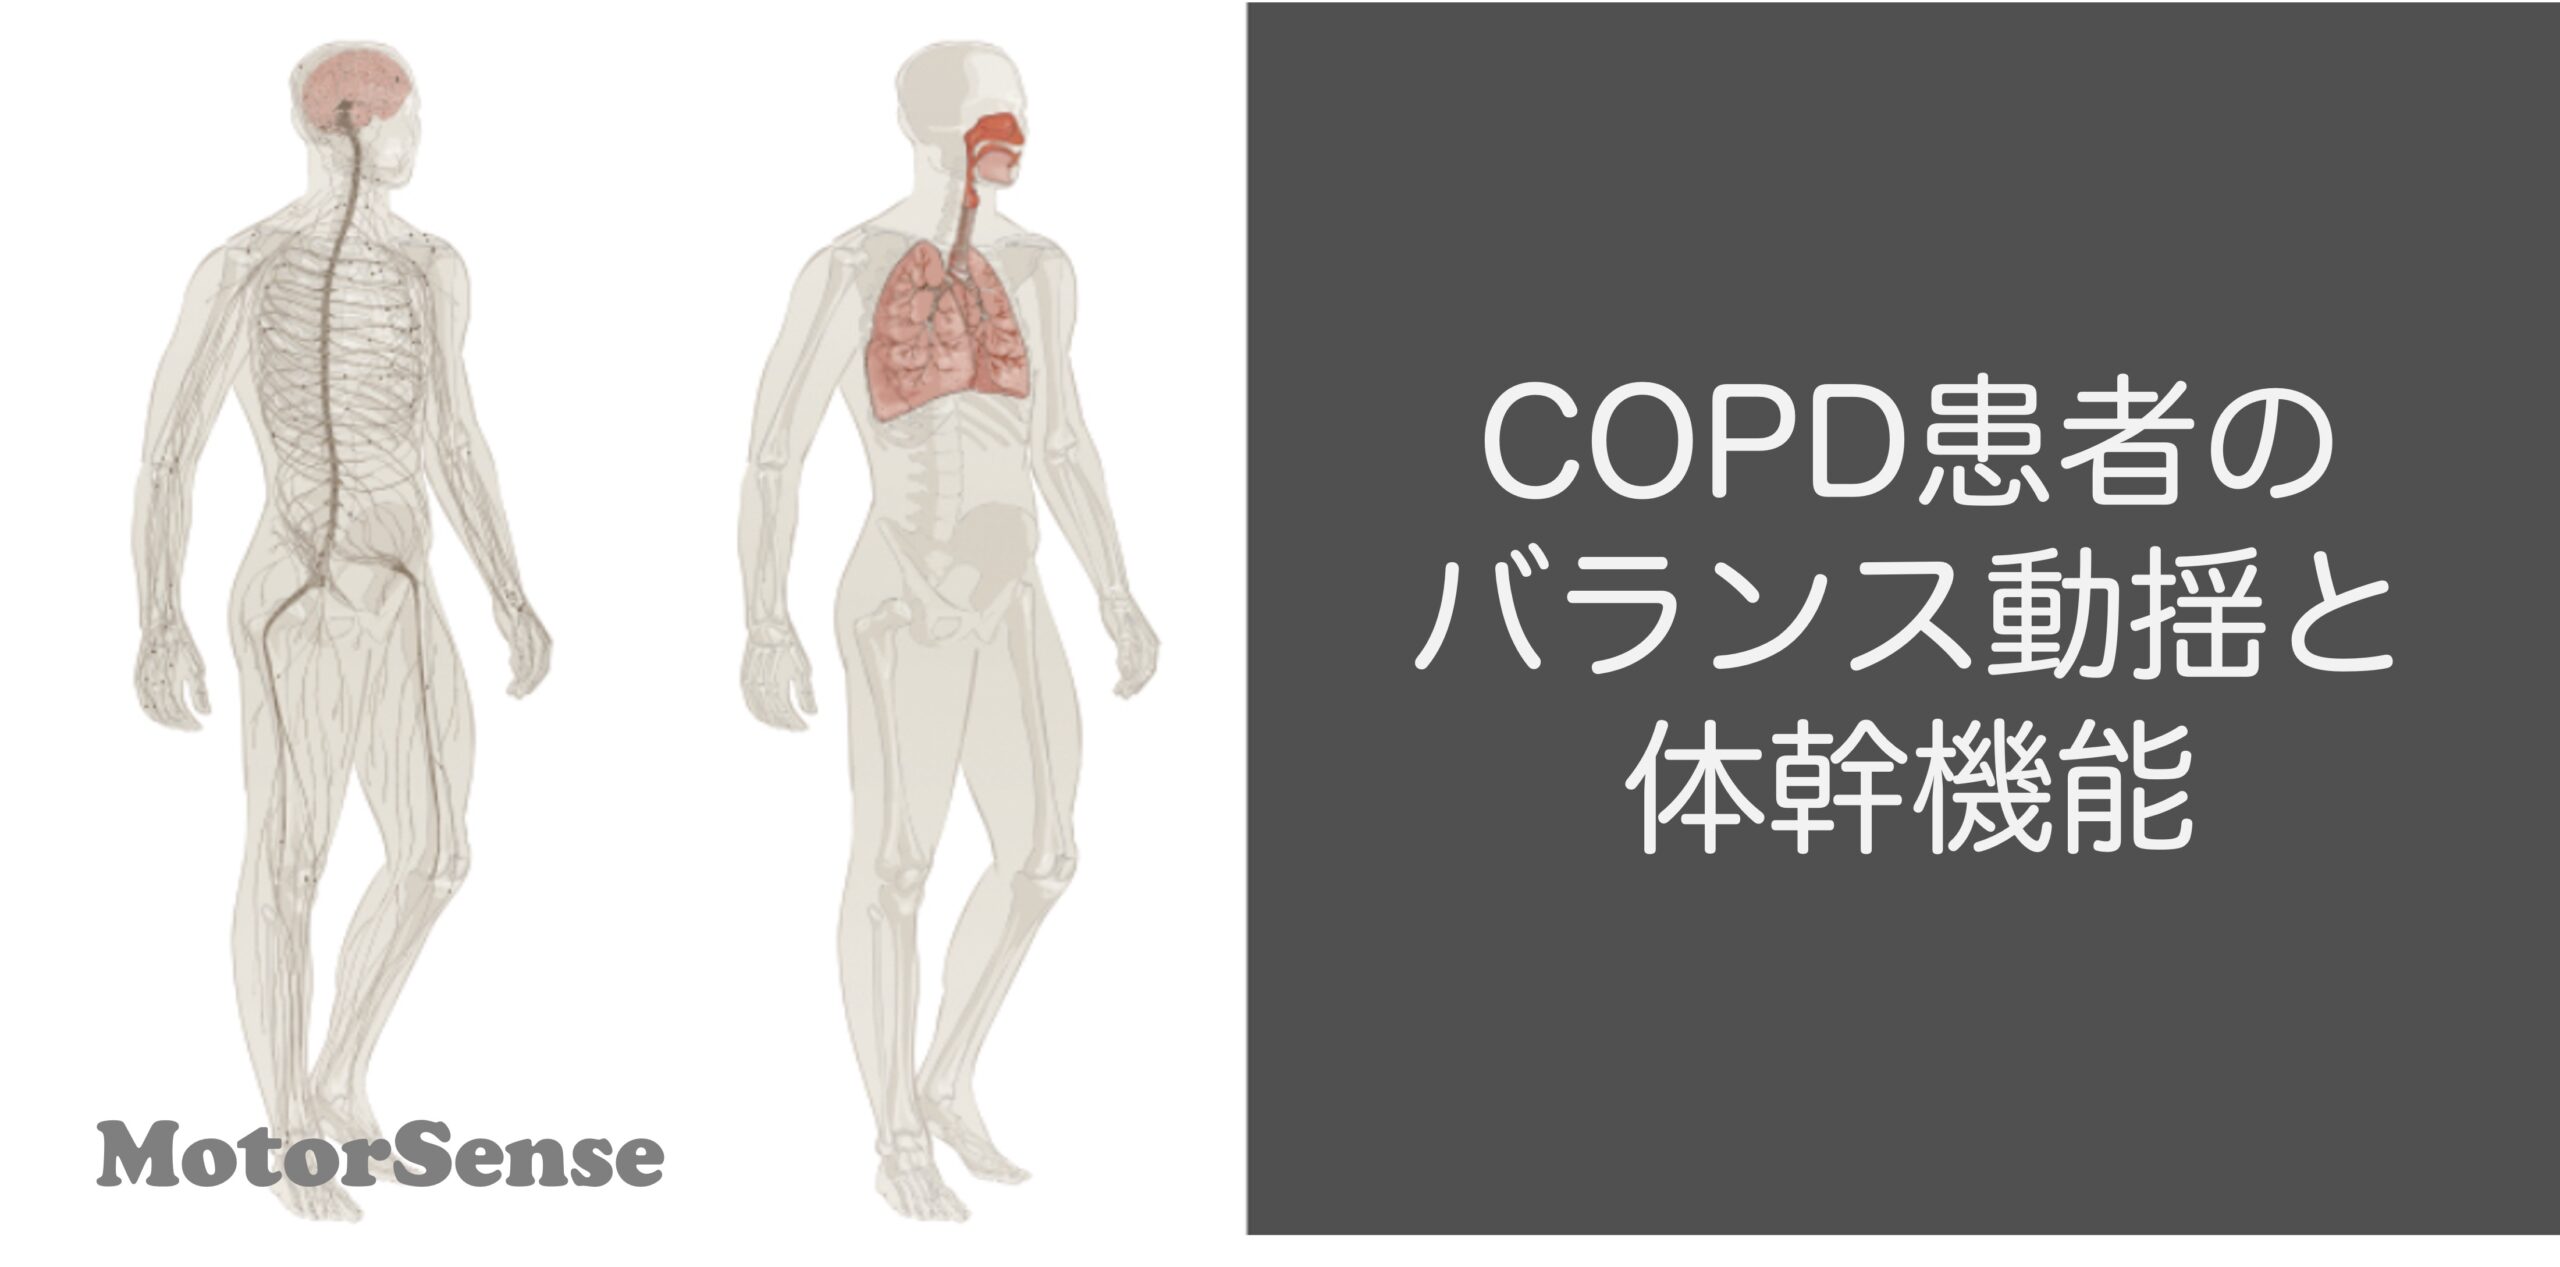 COPD患者のバランス動揺と体幹機能